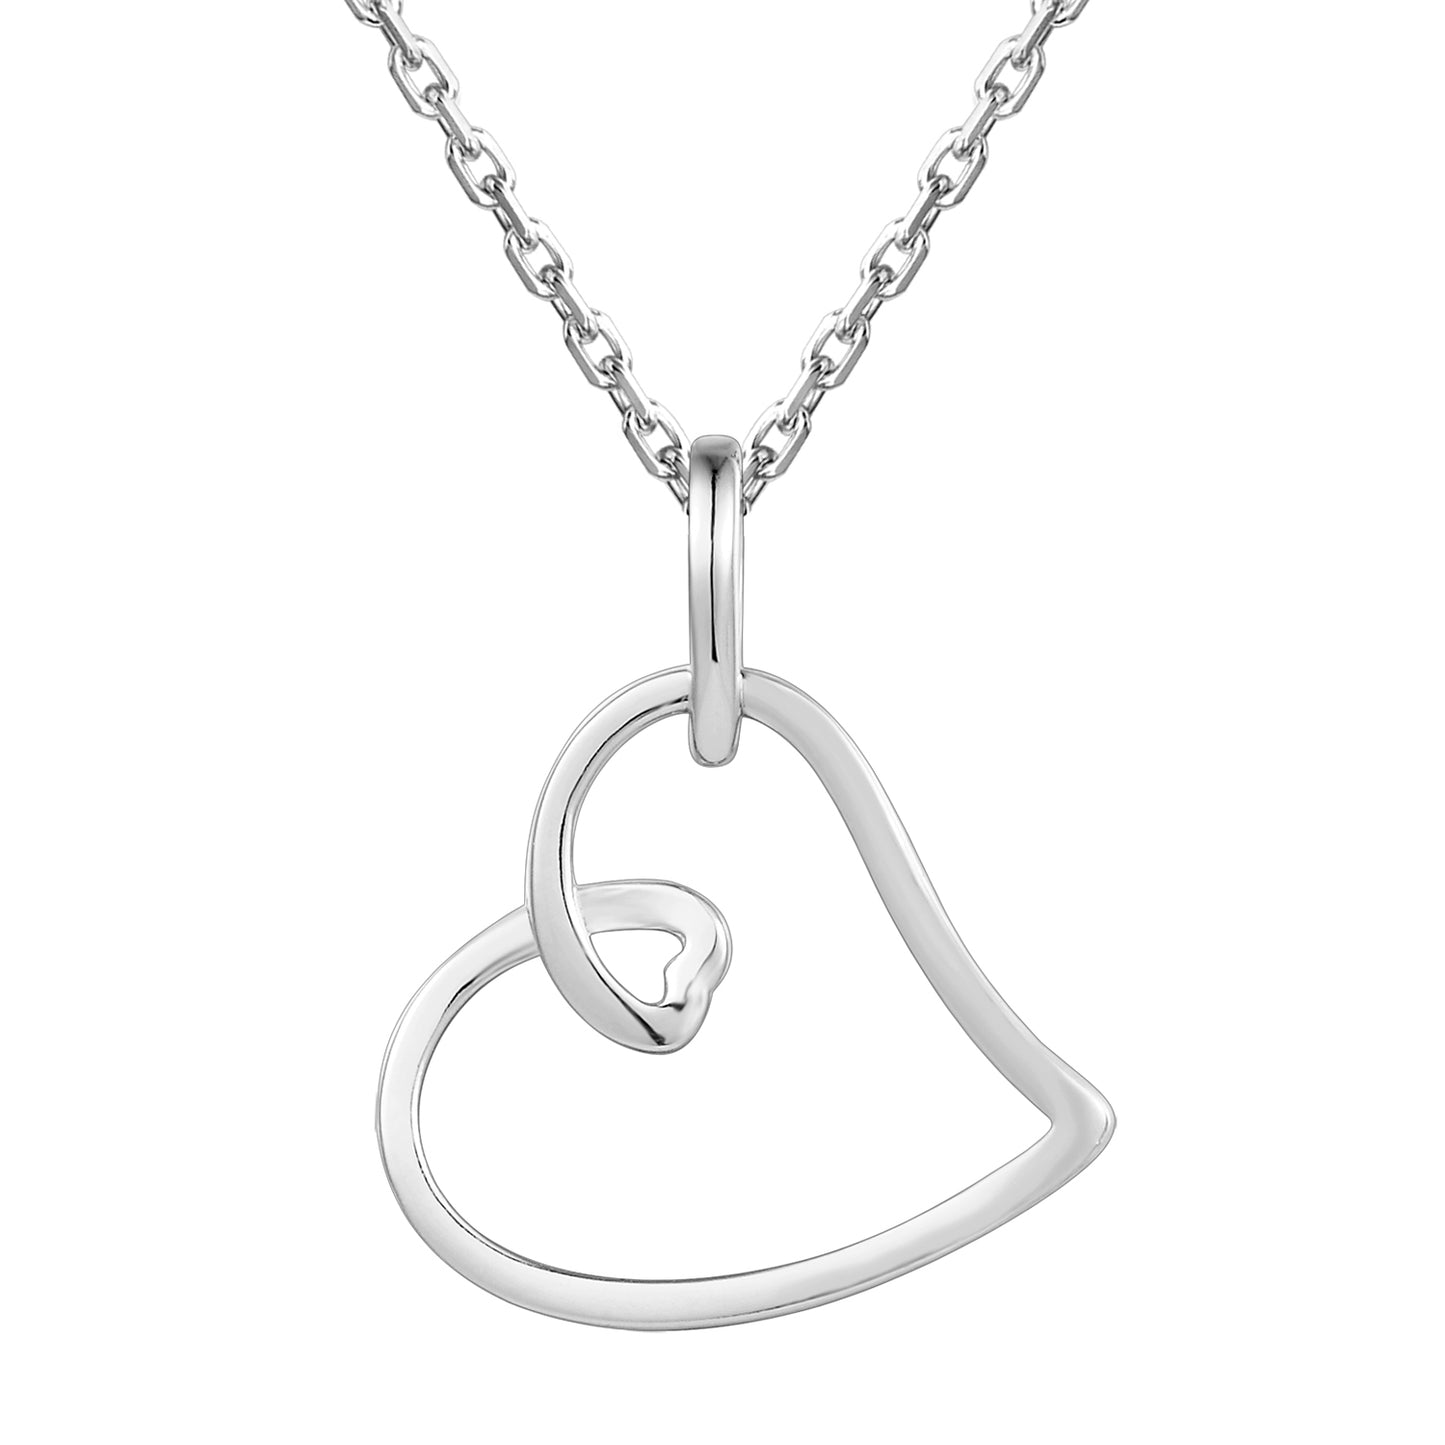 Silver Tilted Plain Open Heart Pendant Chain Valentine's Gift